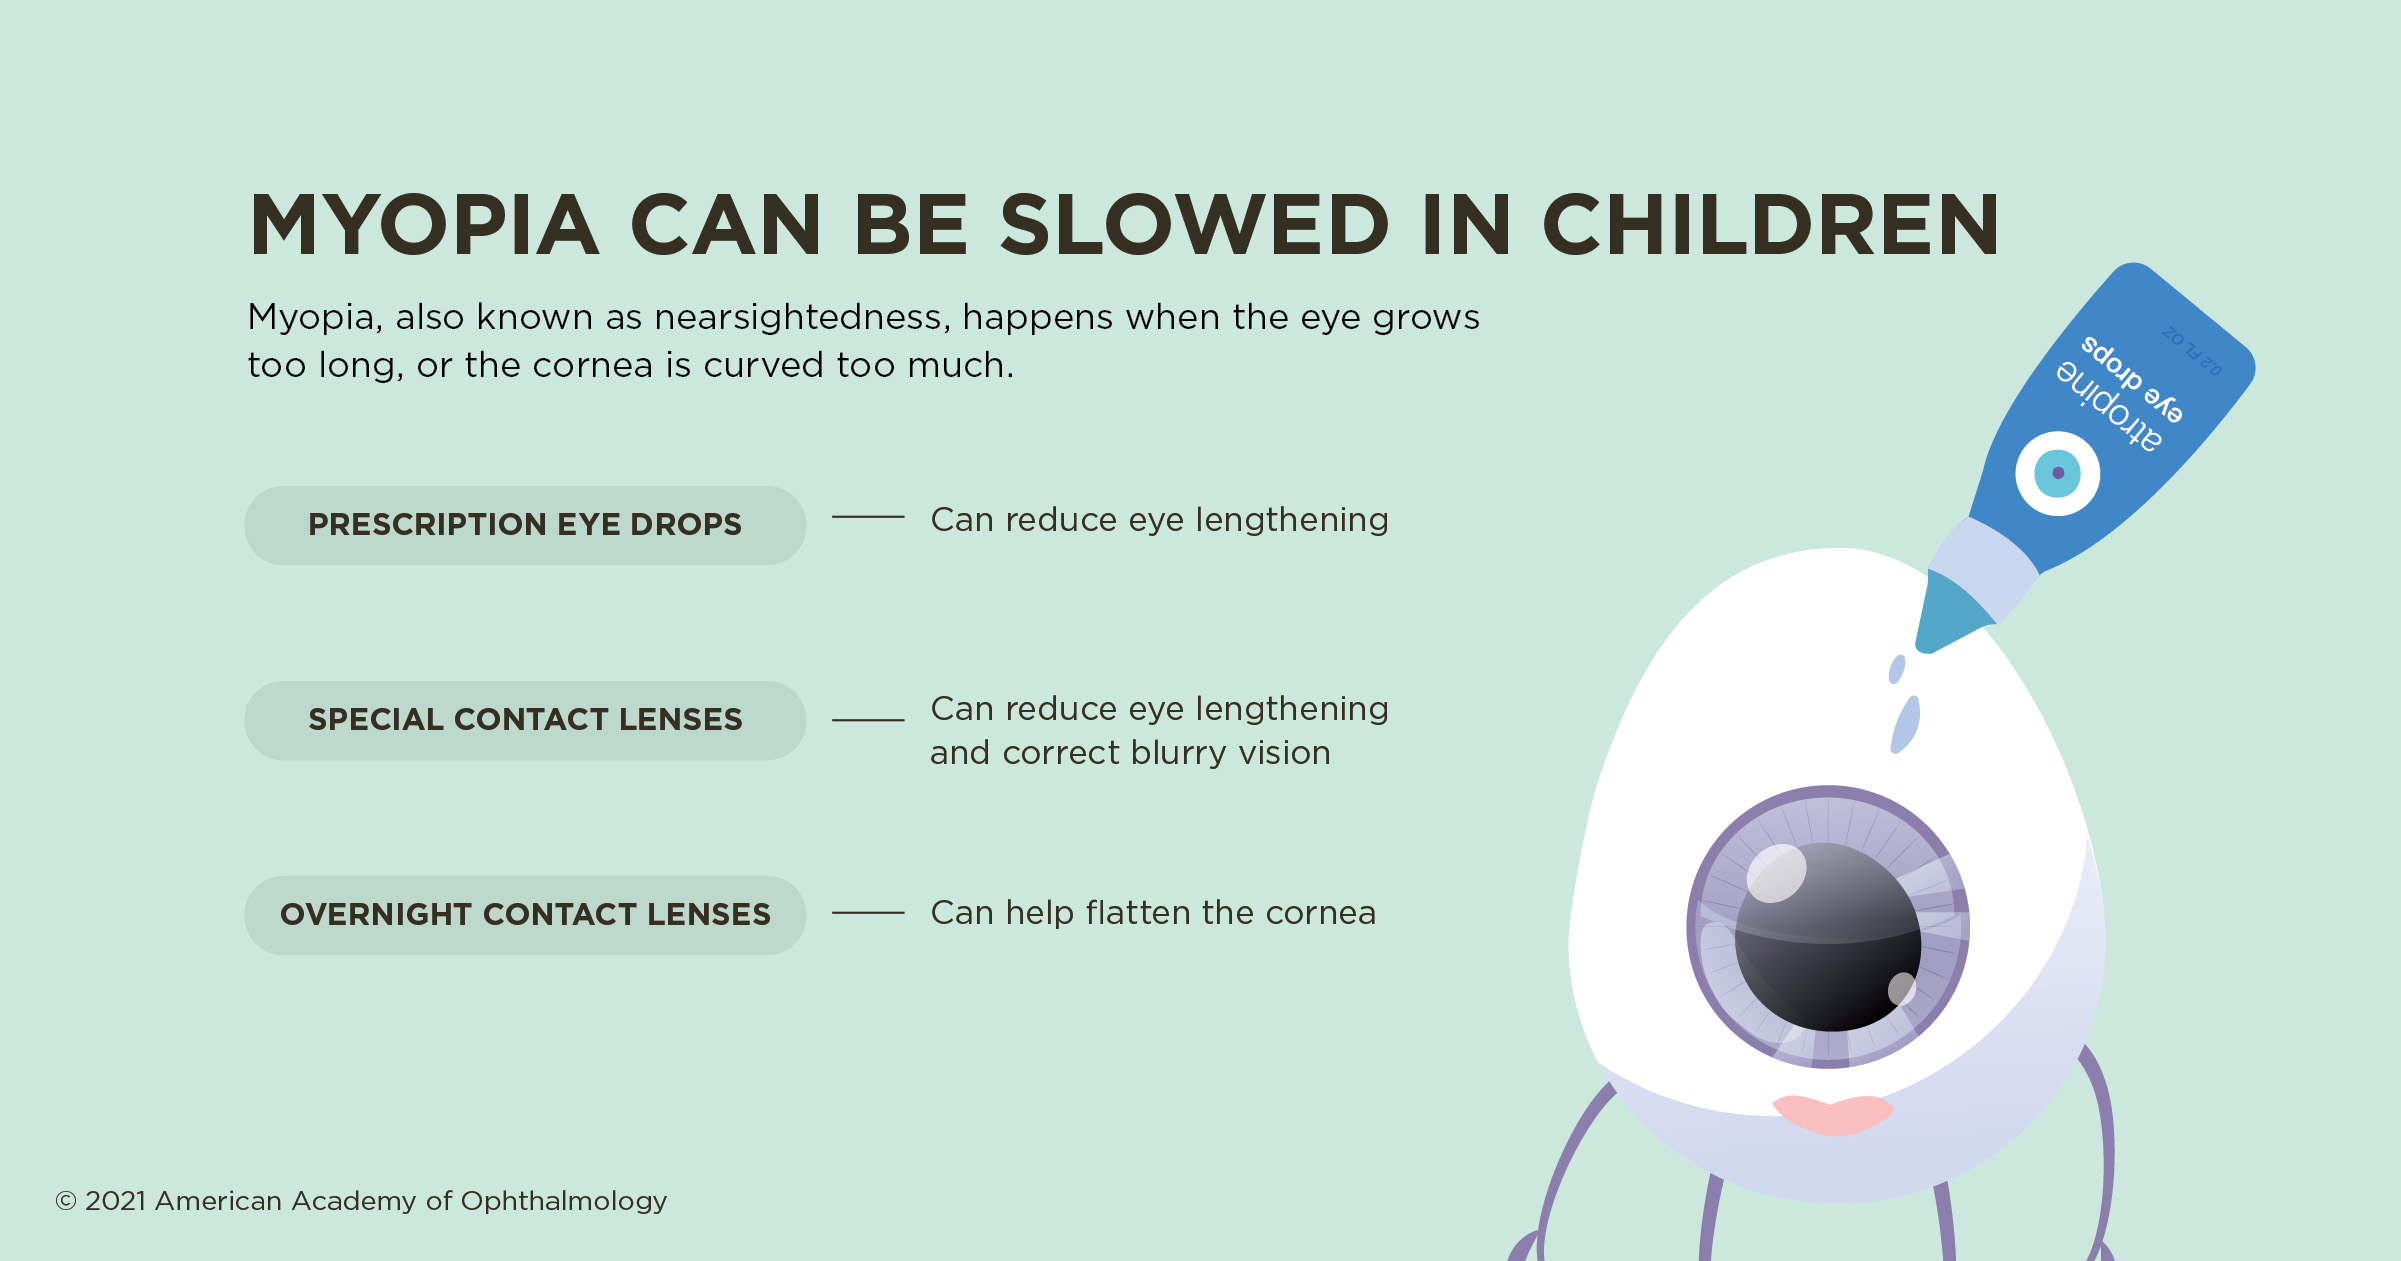 Myopia can be slowed in children